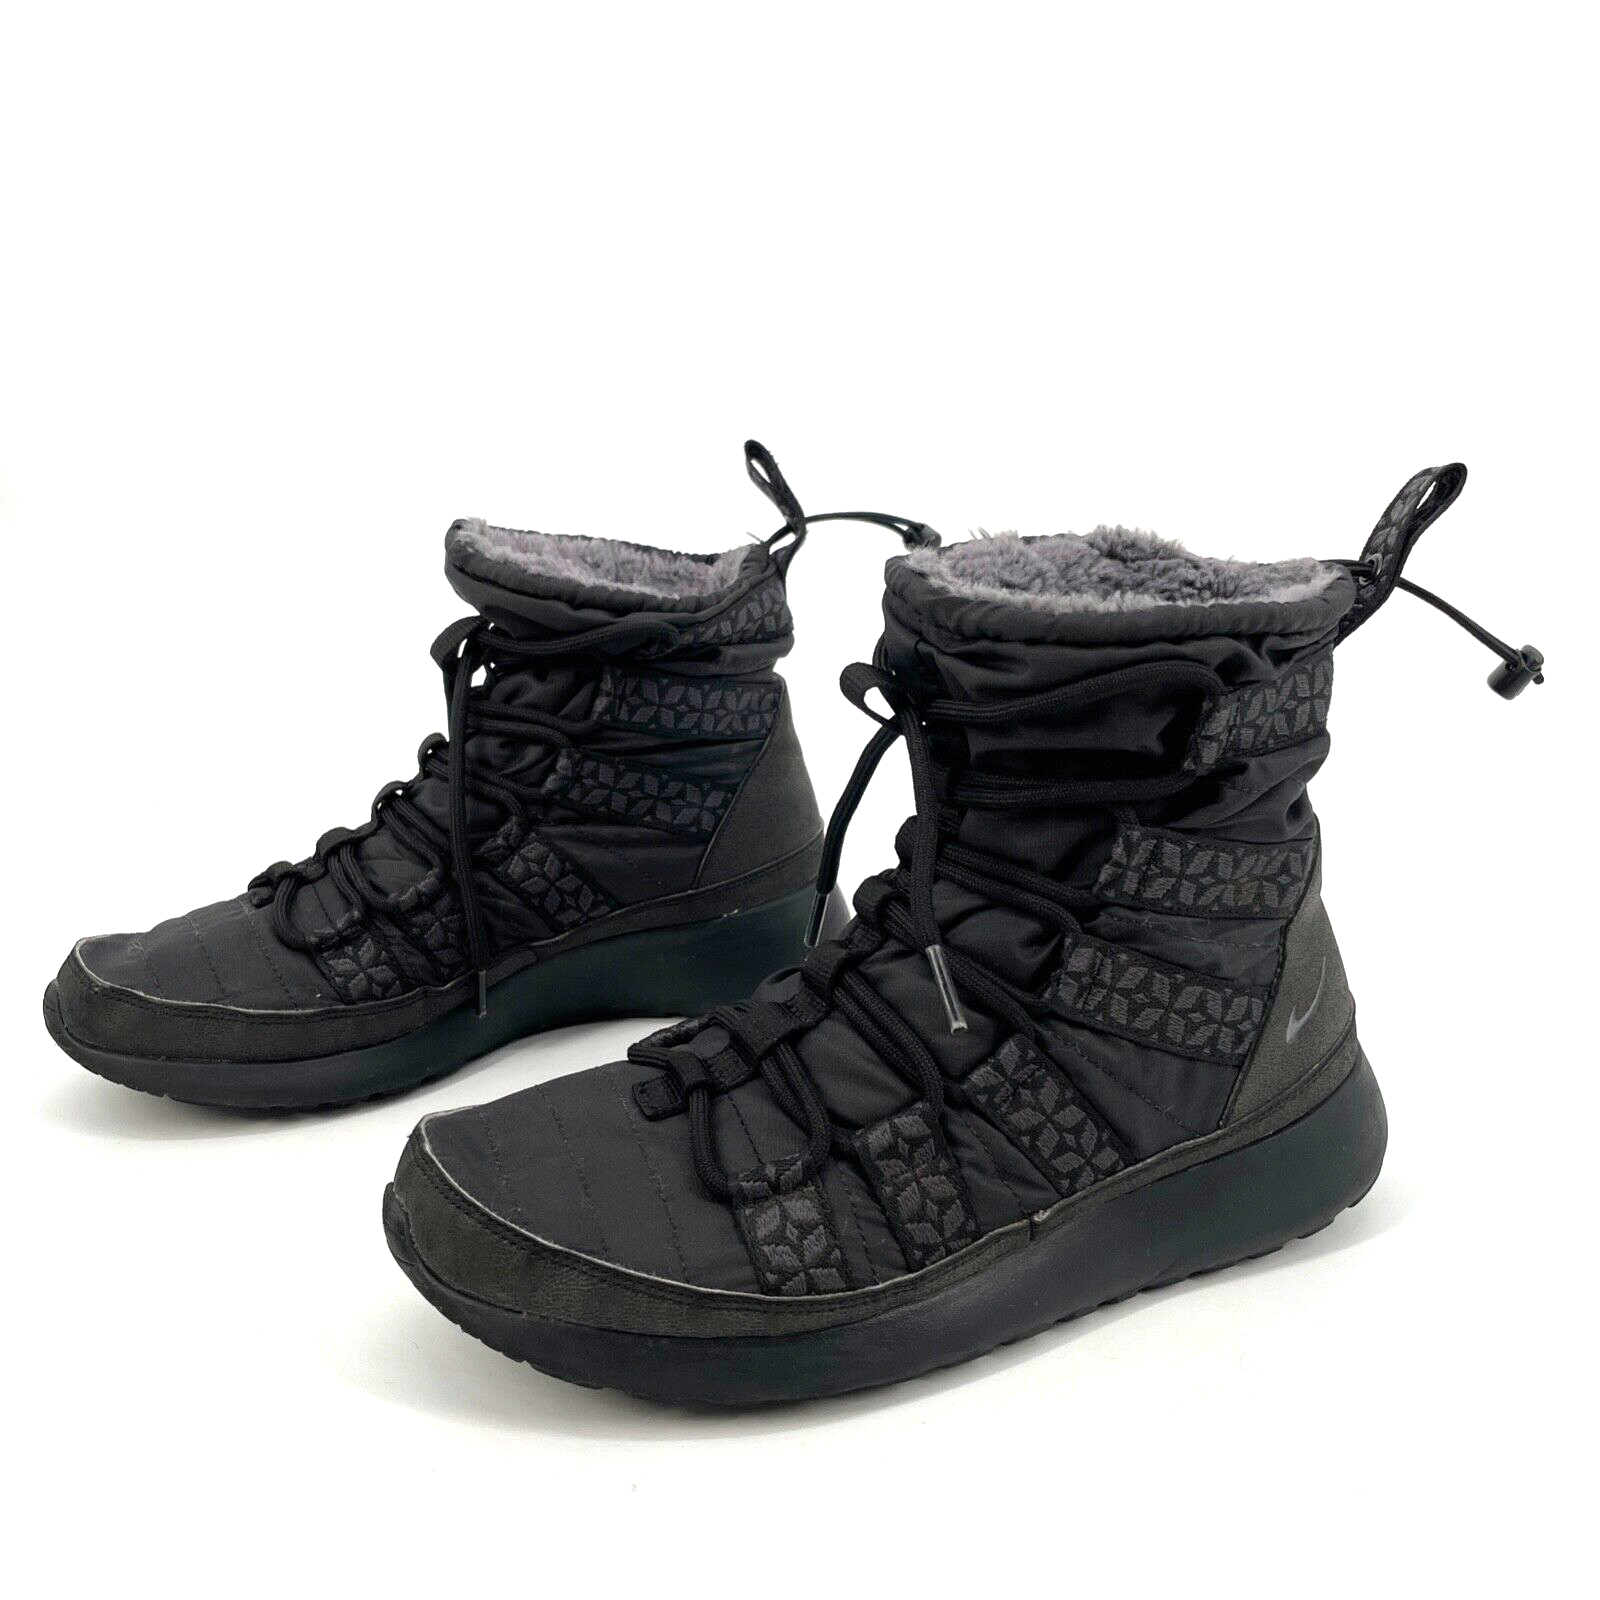 Nike womens 8 Roshe Run Sneaker Boots Winter Boots Black 615968-006 | eBay